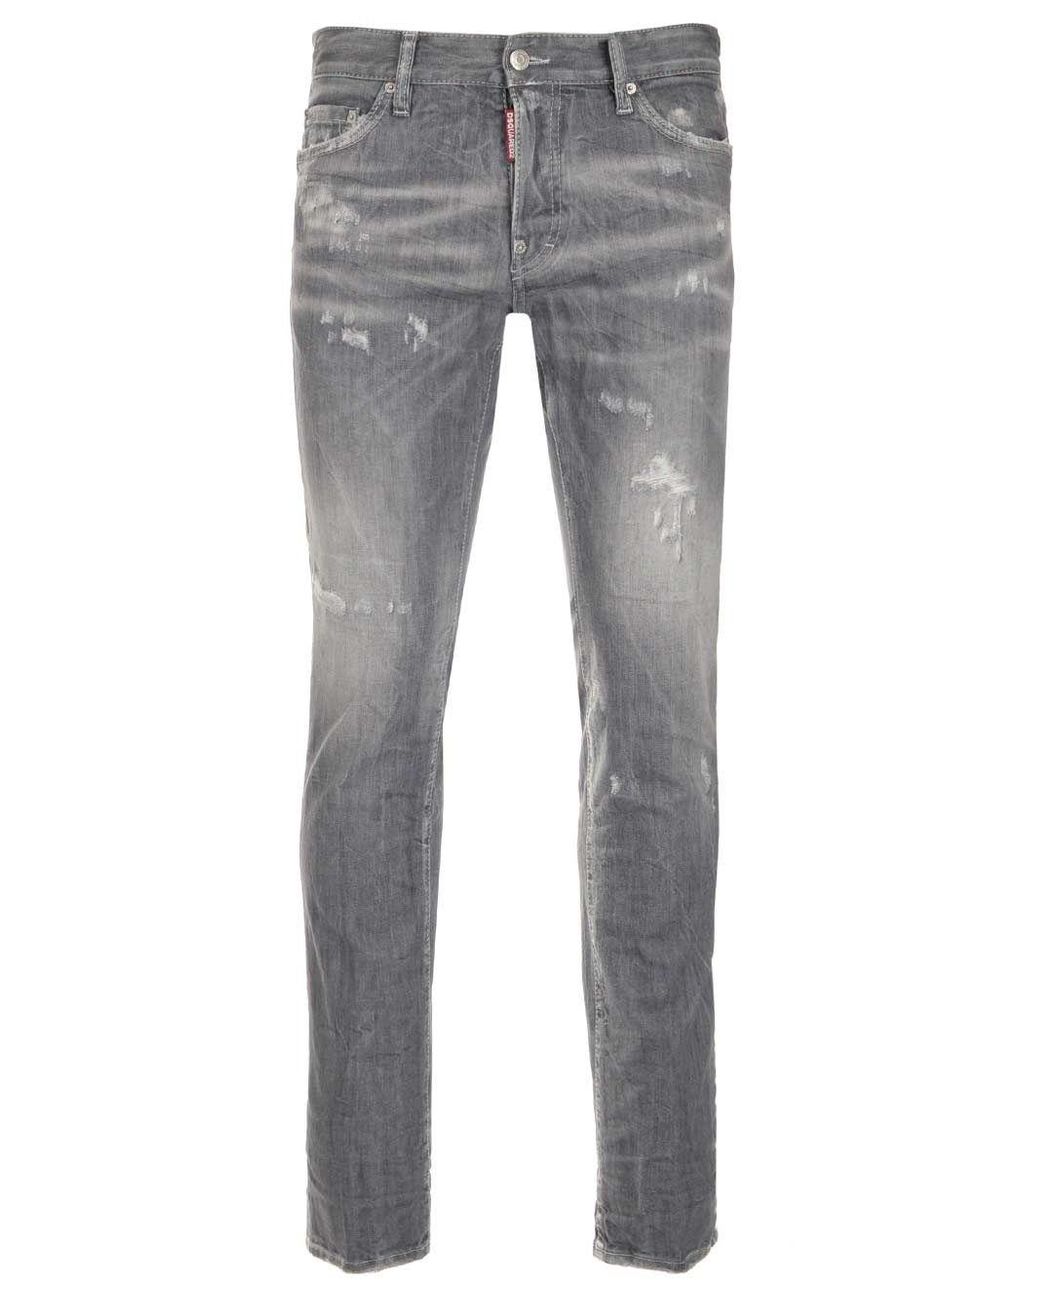 DSquared² Denim Jeans in Grey (Gray) for Men - Lyst